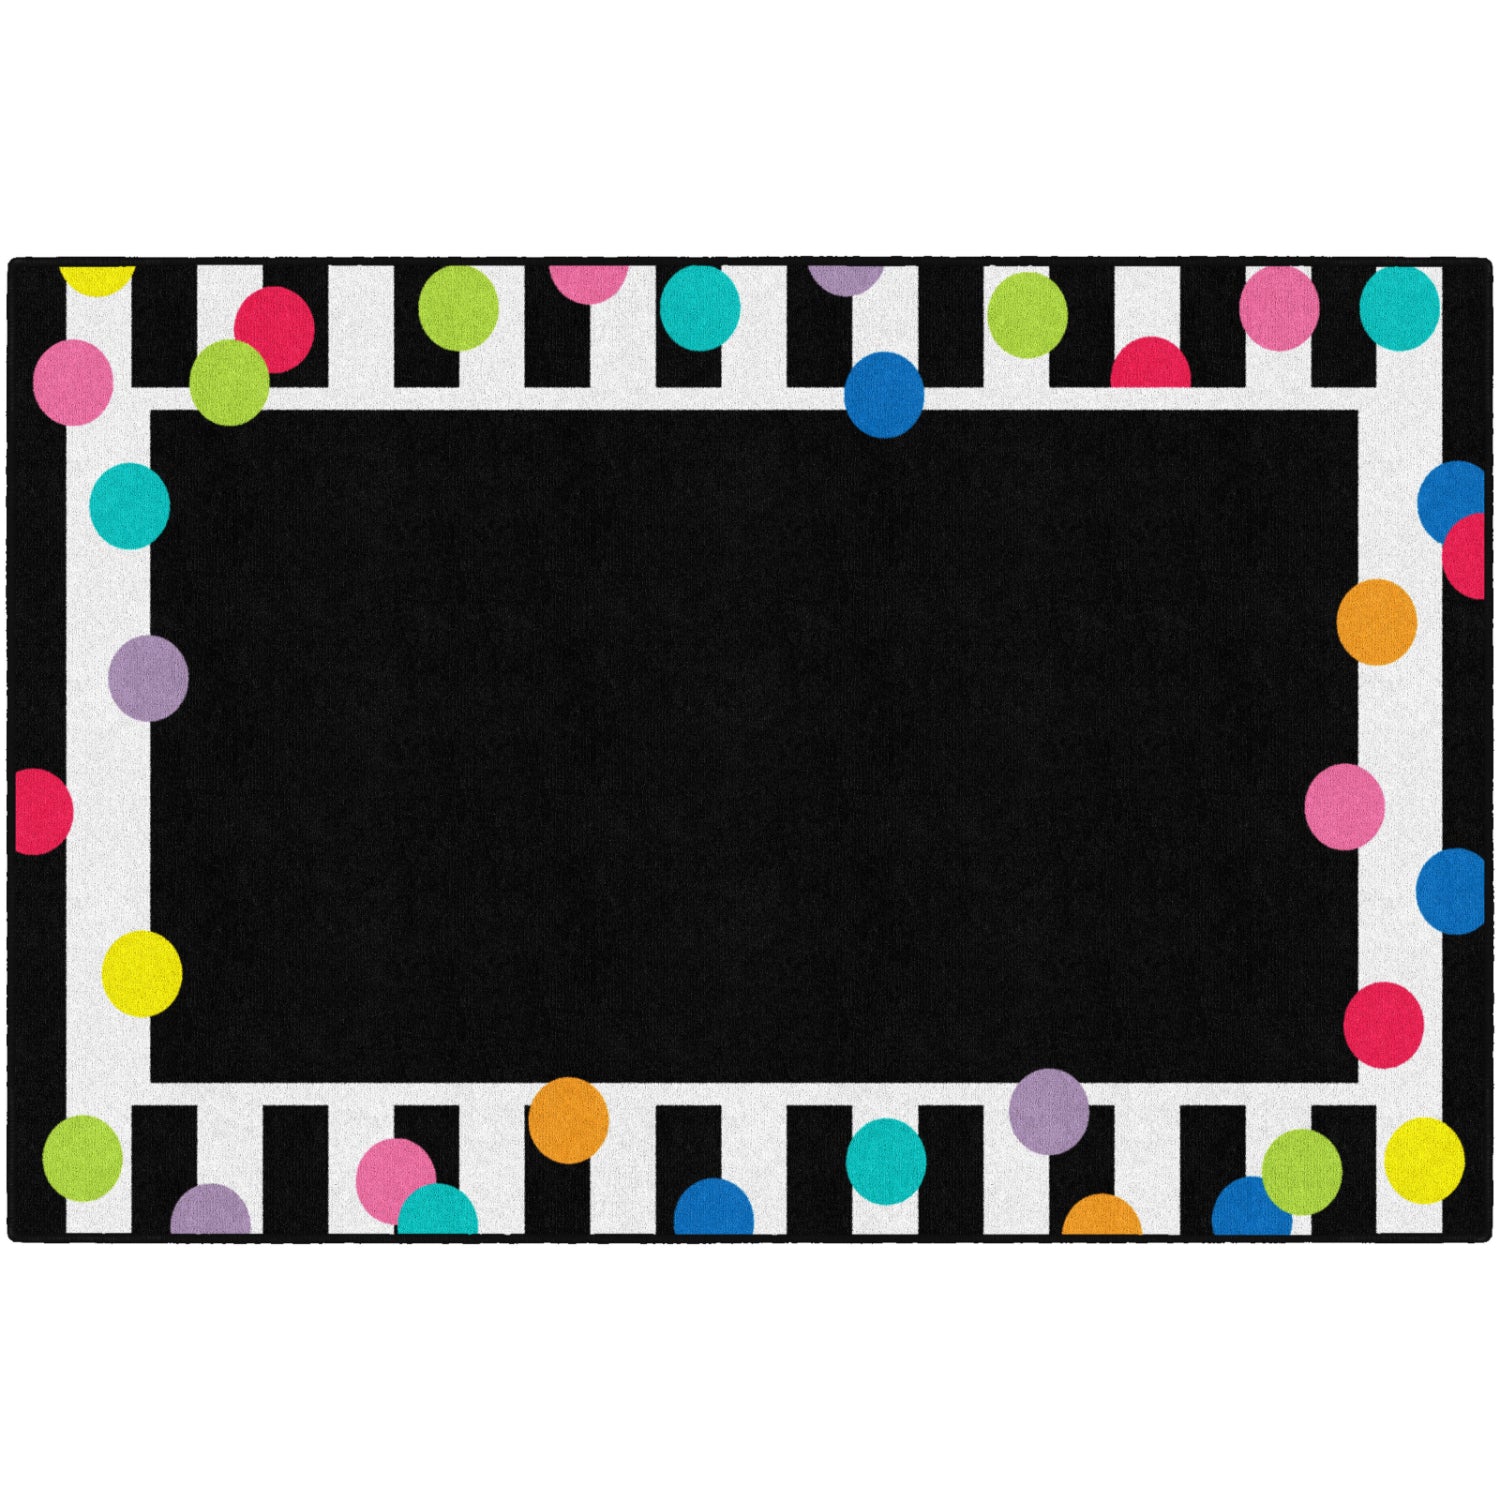 Schoolgirl Style Just Teach Black, White & Bright Polka Dot Border Rugs